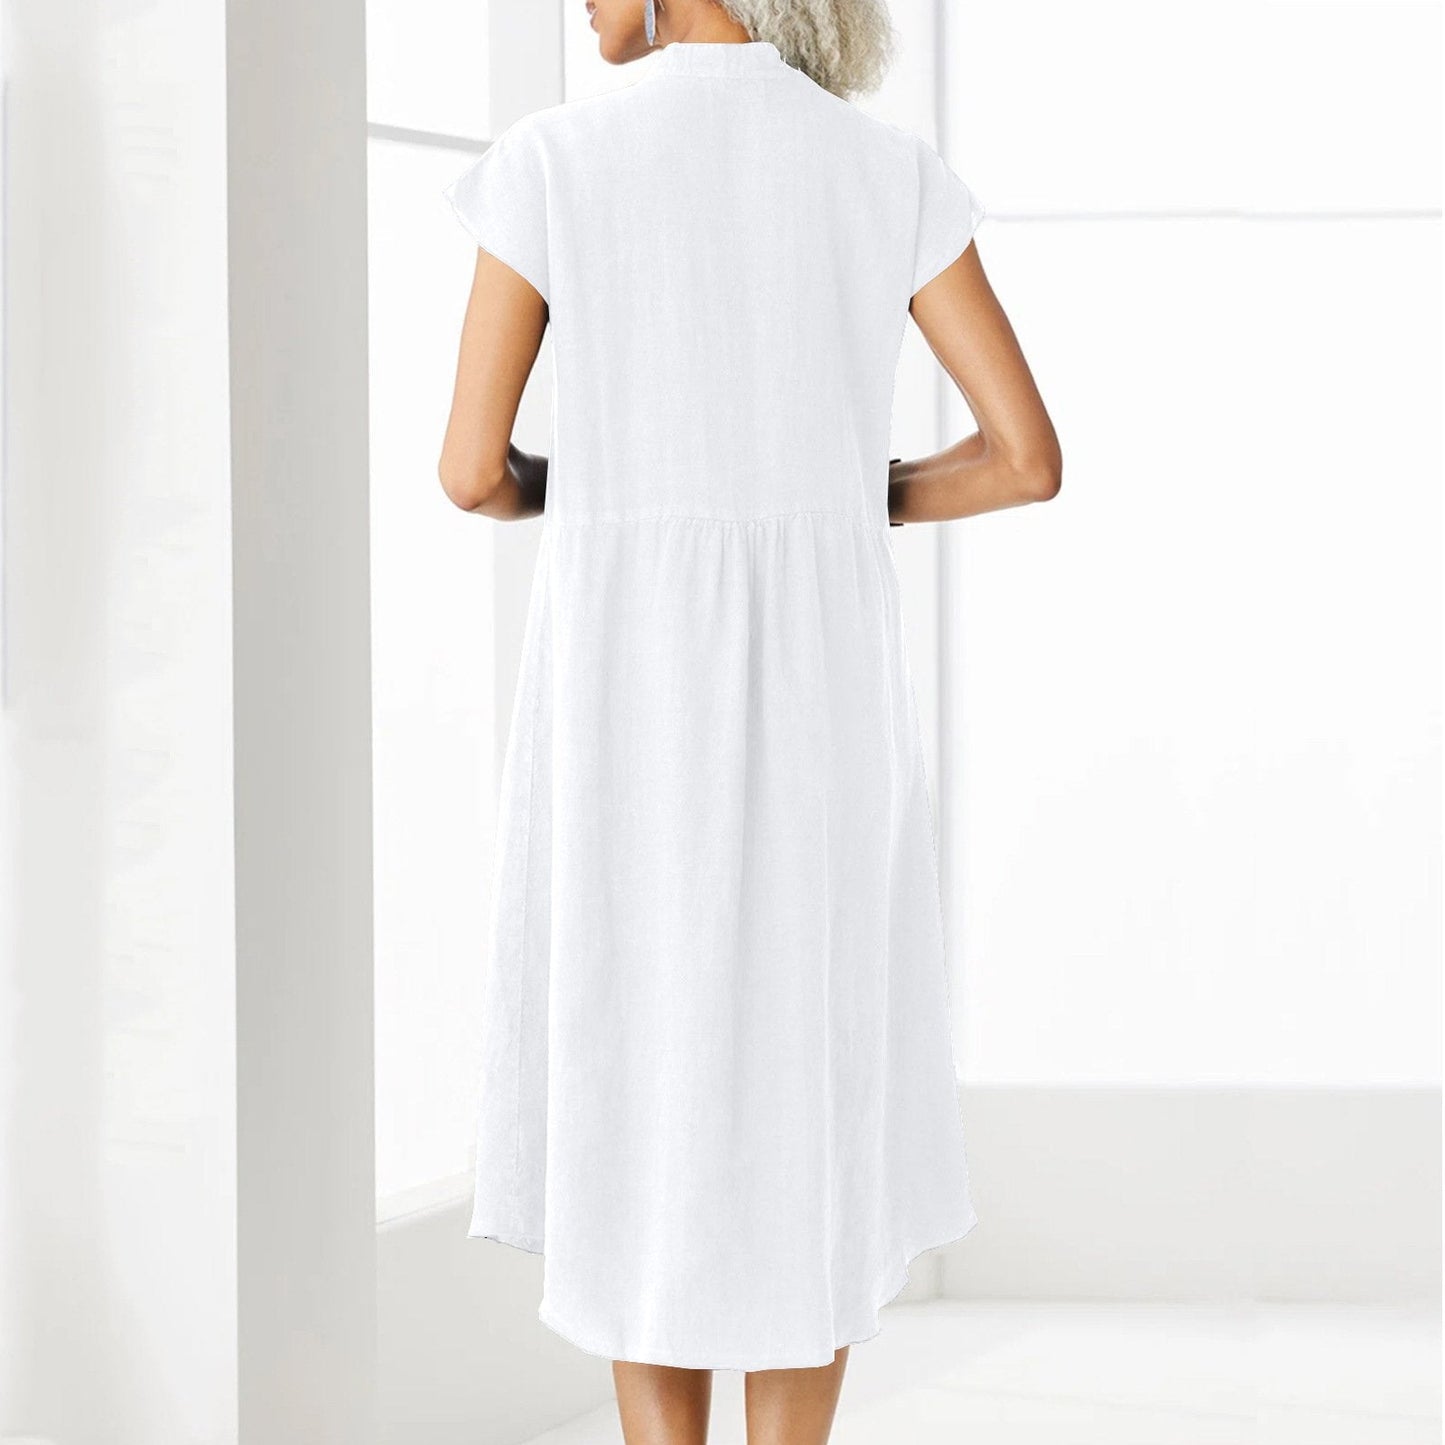 Women’s Button-down Cotton Linen Loose Dress with Pocket